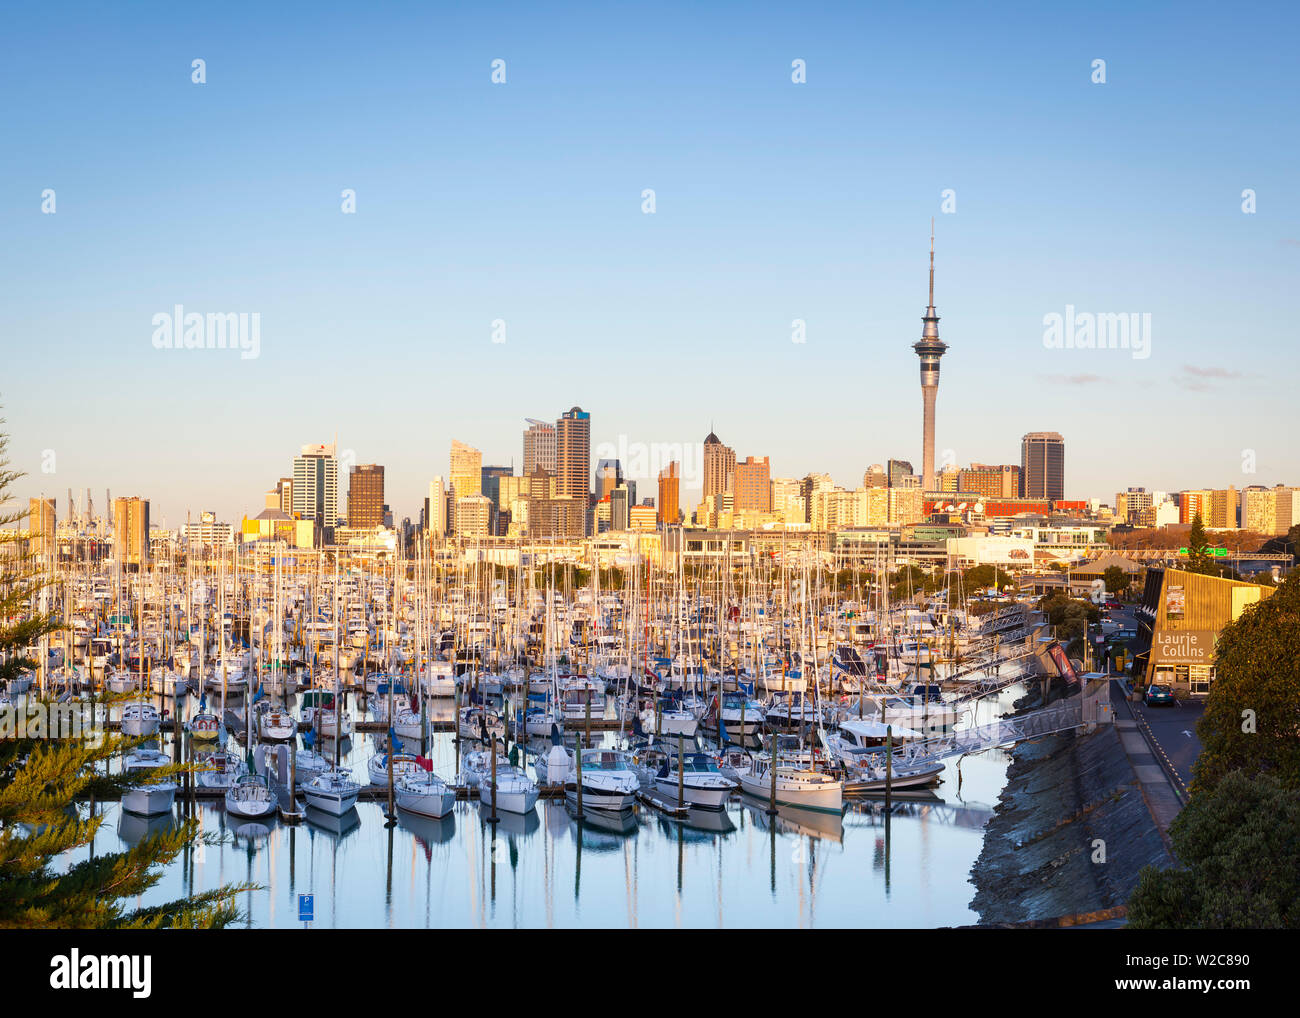 Westhaven Marina & city skyline illuminated at sunset, Waitemata Harbour, Auckland, North Island, New Zealand, Australasia Stock Photo